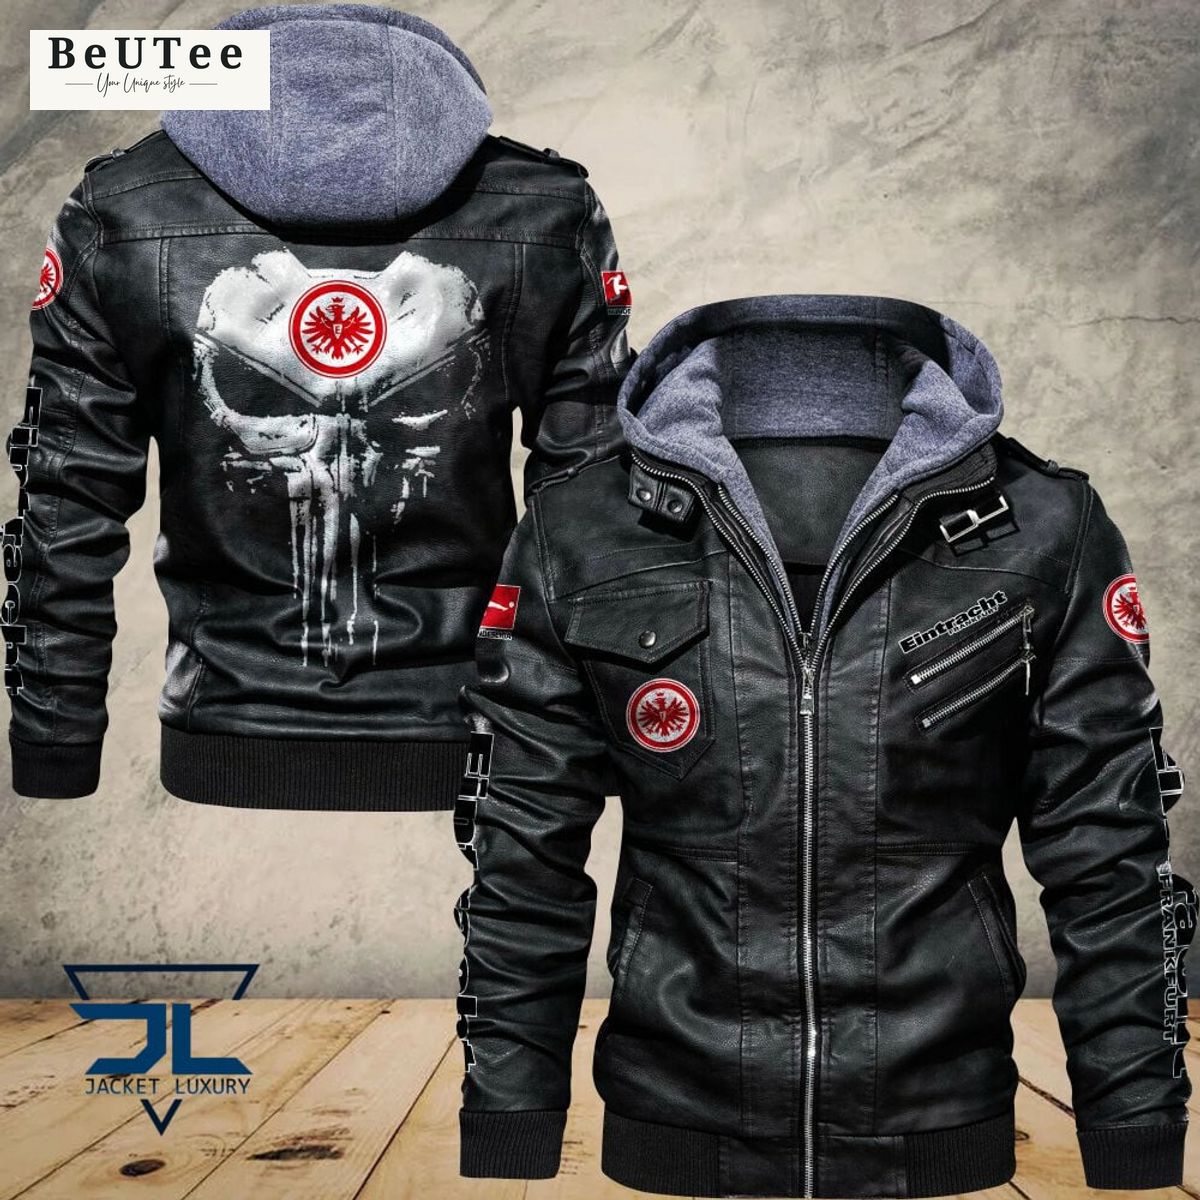 eintracht frankfurt bundesliga germany league 2d leather jacket 1 9jozK